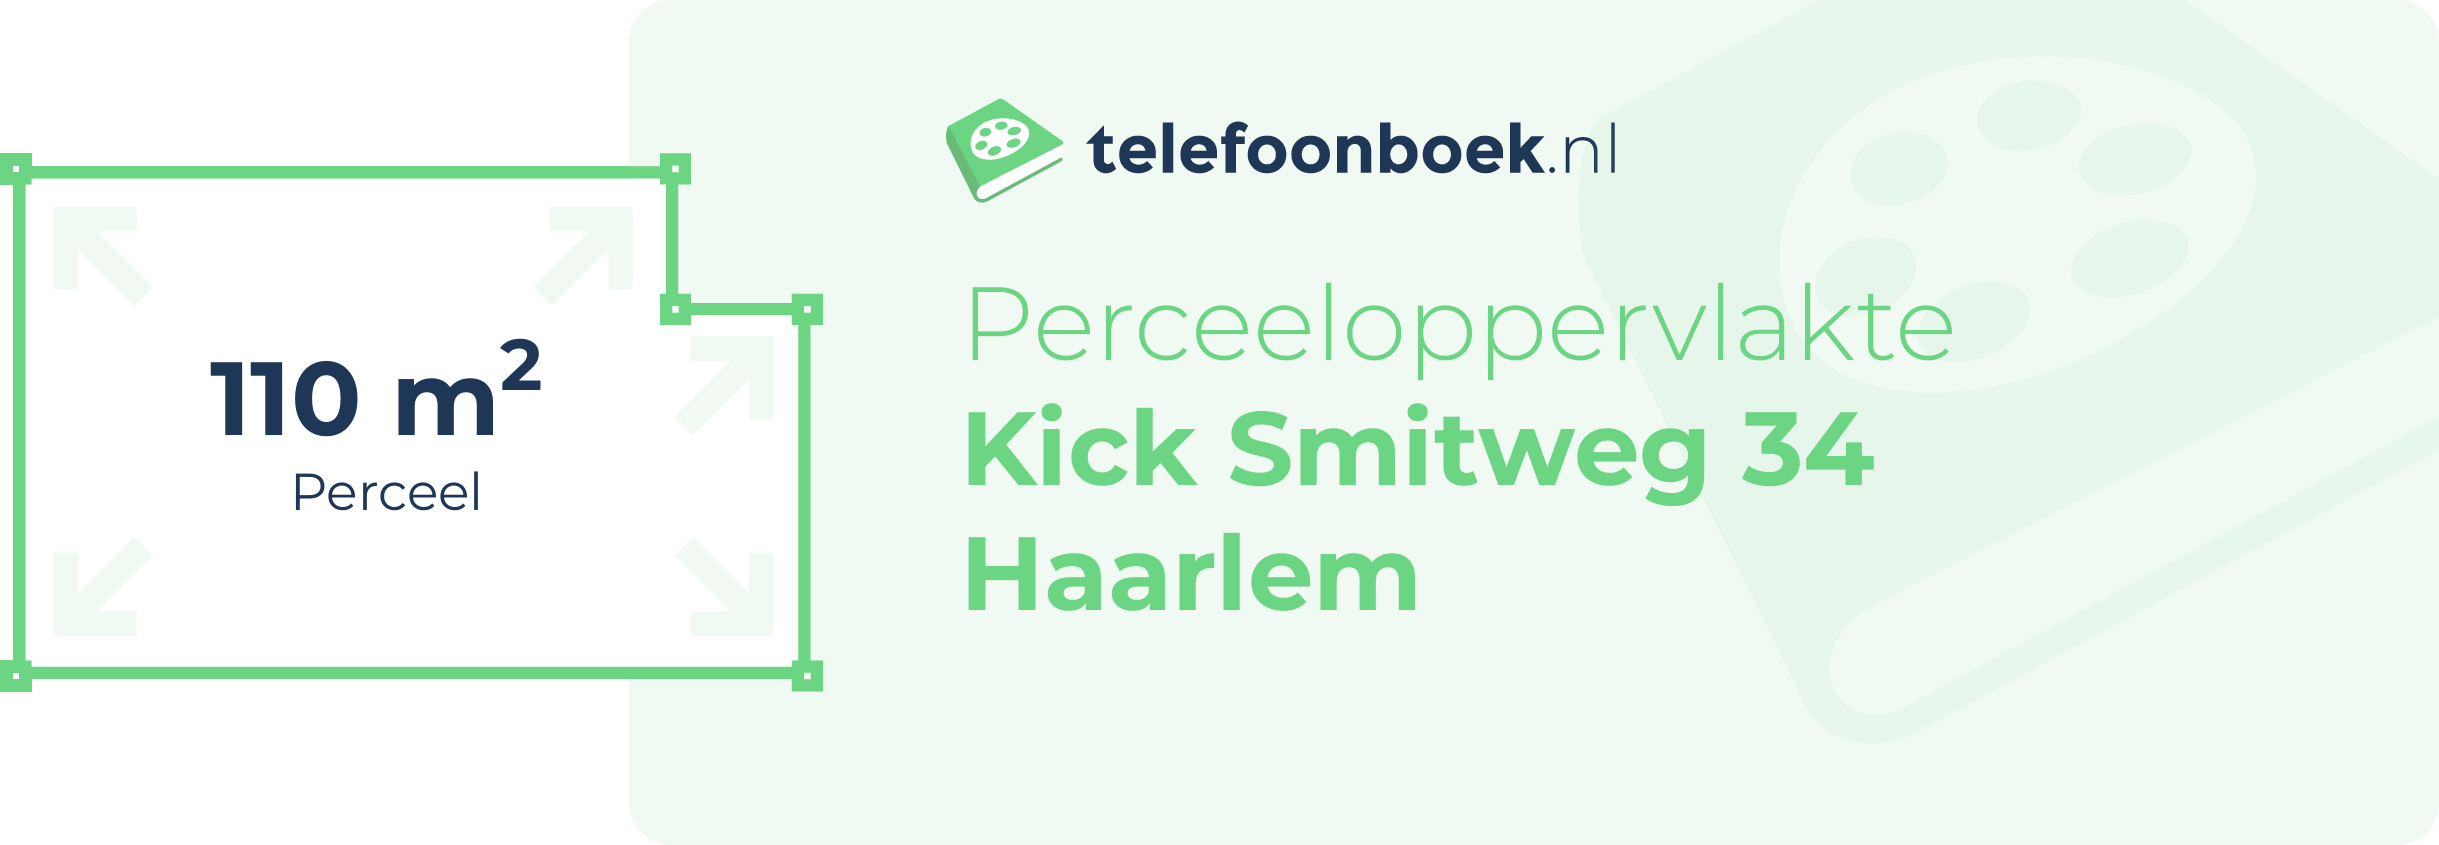 Perceeloppervlakte Kick Smitweg 34 Haarlem